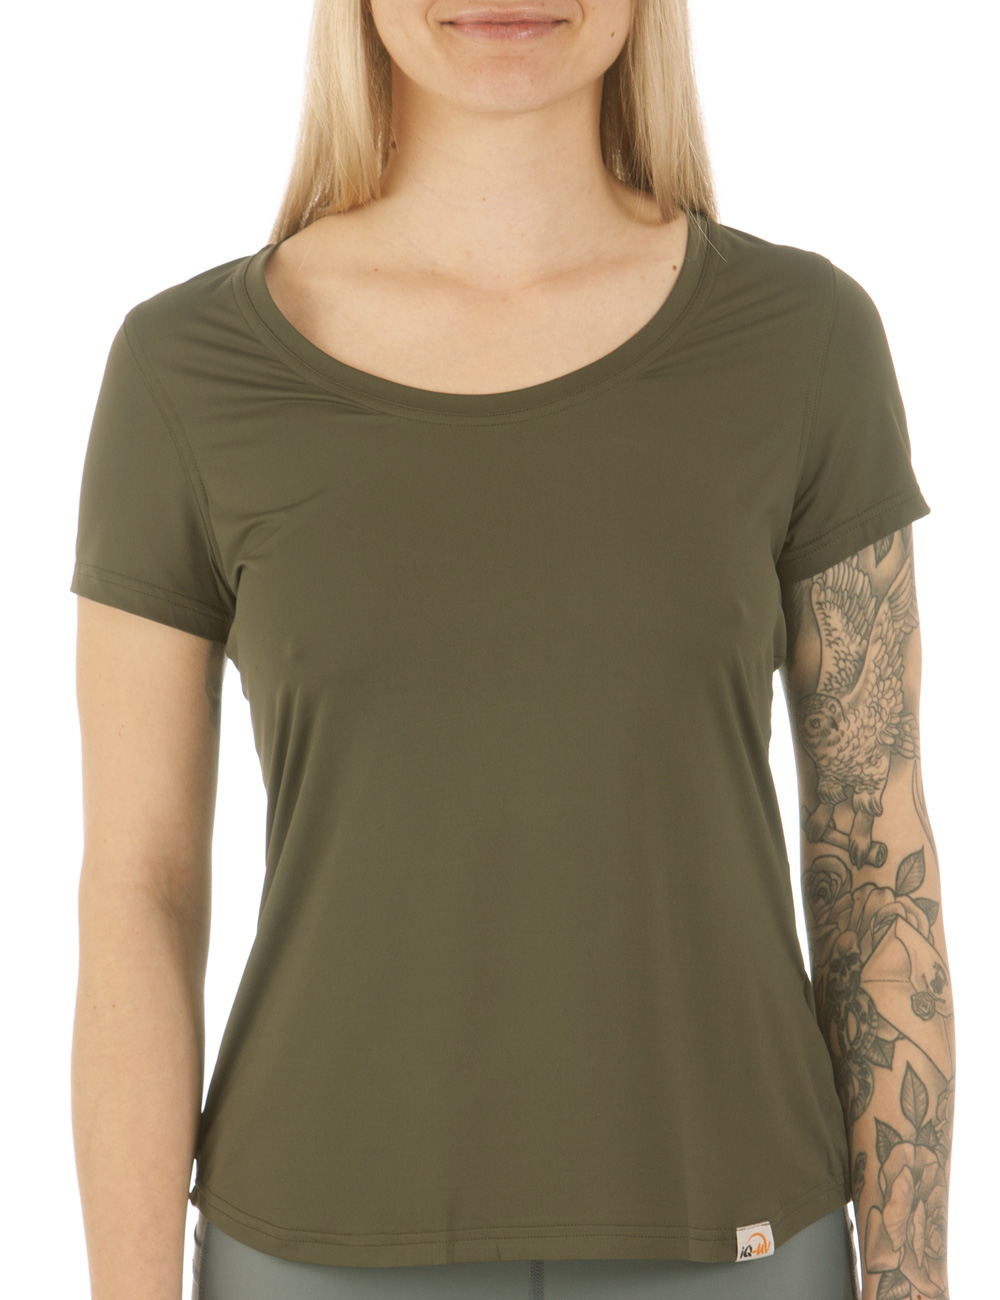 UV FREE Weitsicht shirt kurzarm grün front